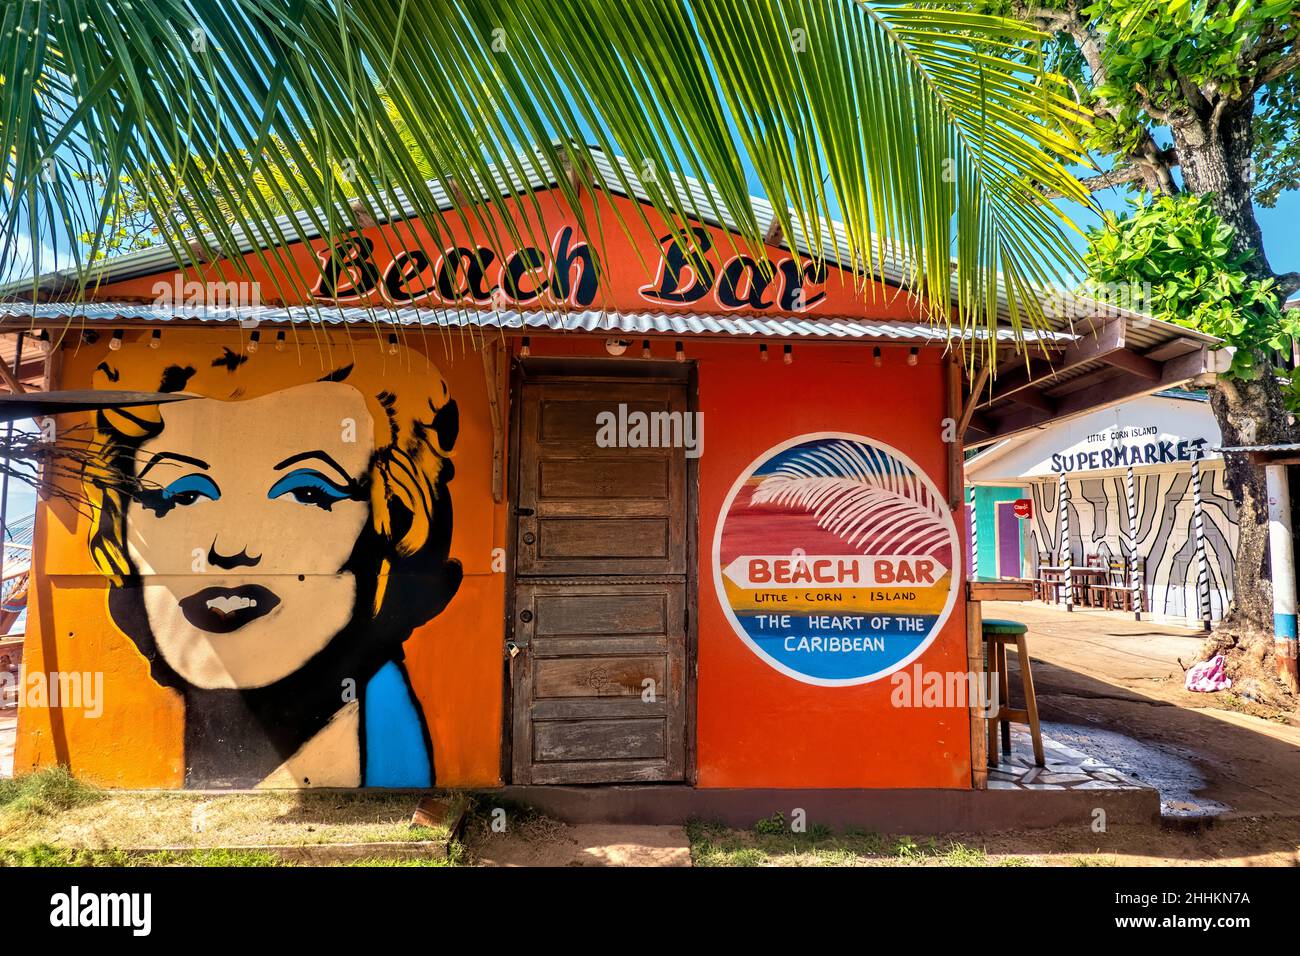 Colorful beach bar, Little Corn Island, Nicaragua Stock Photo